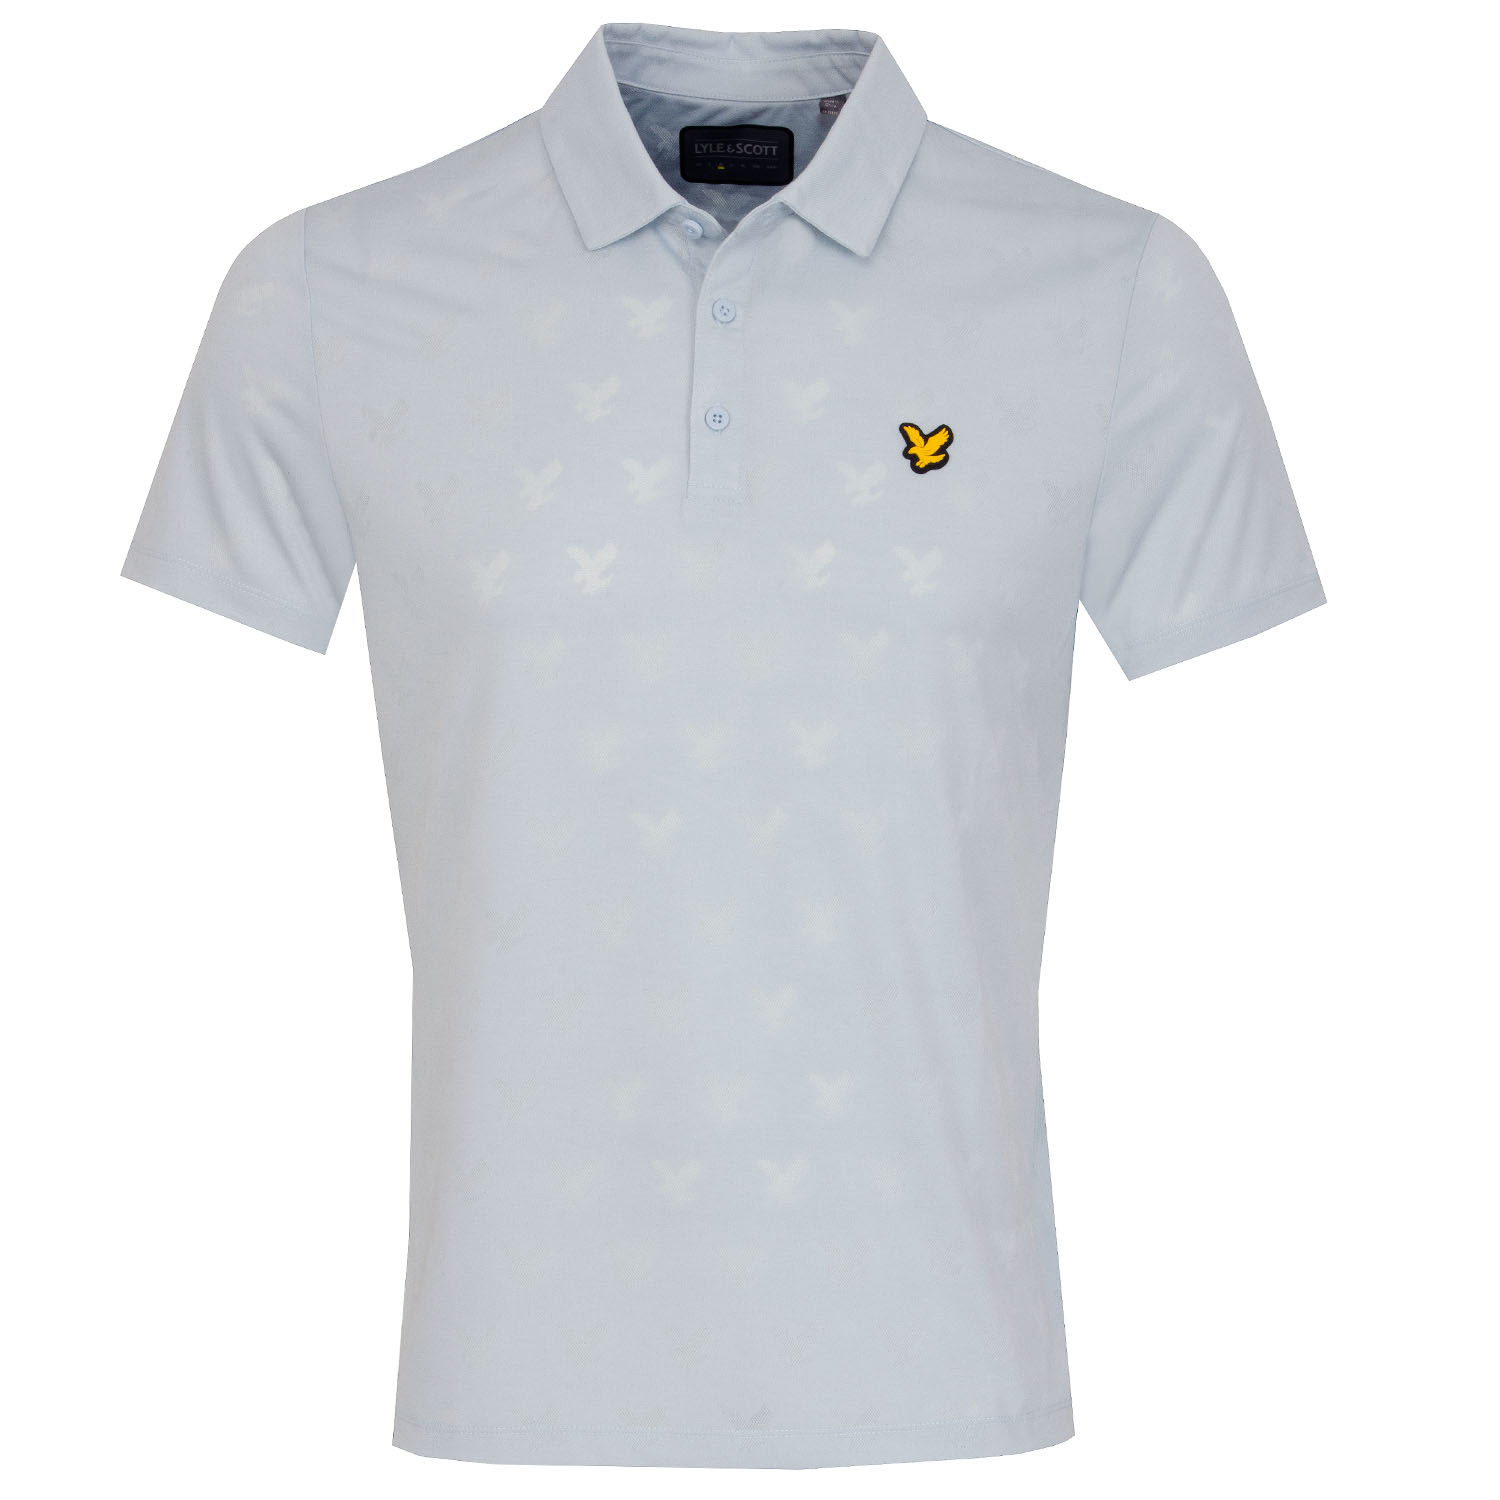 Image of Lyle & Scott Jacquard Golf Polo Shirt